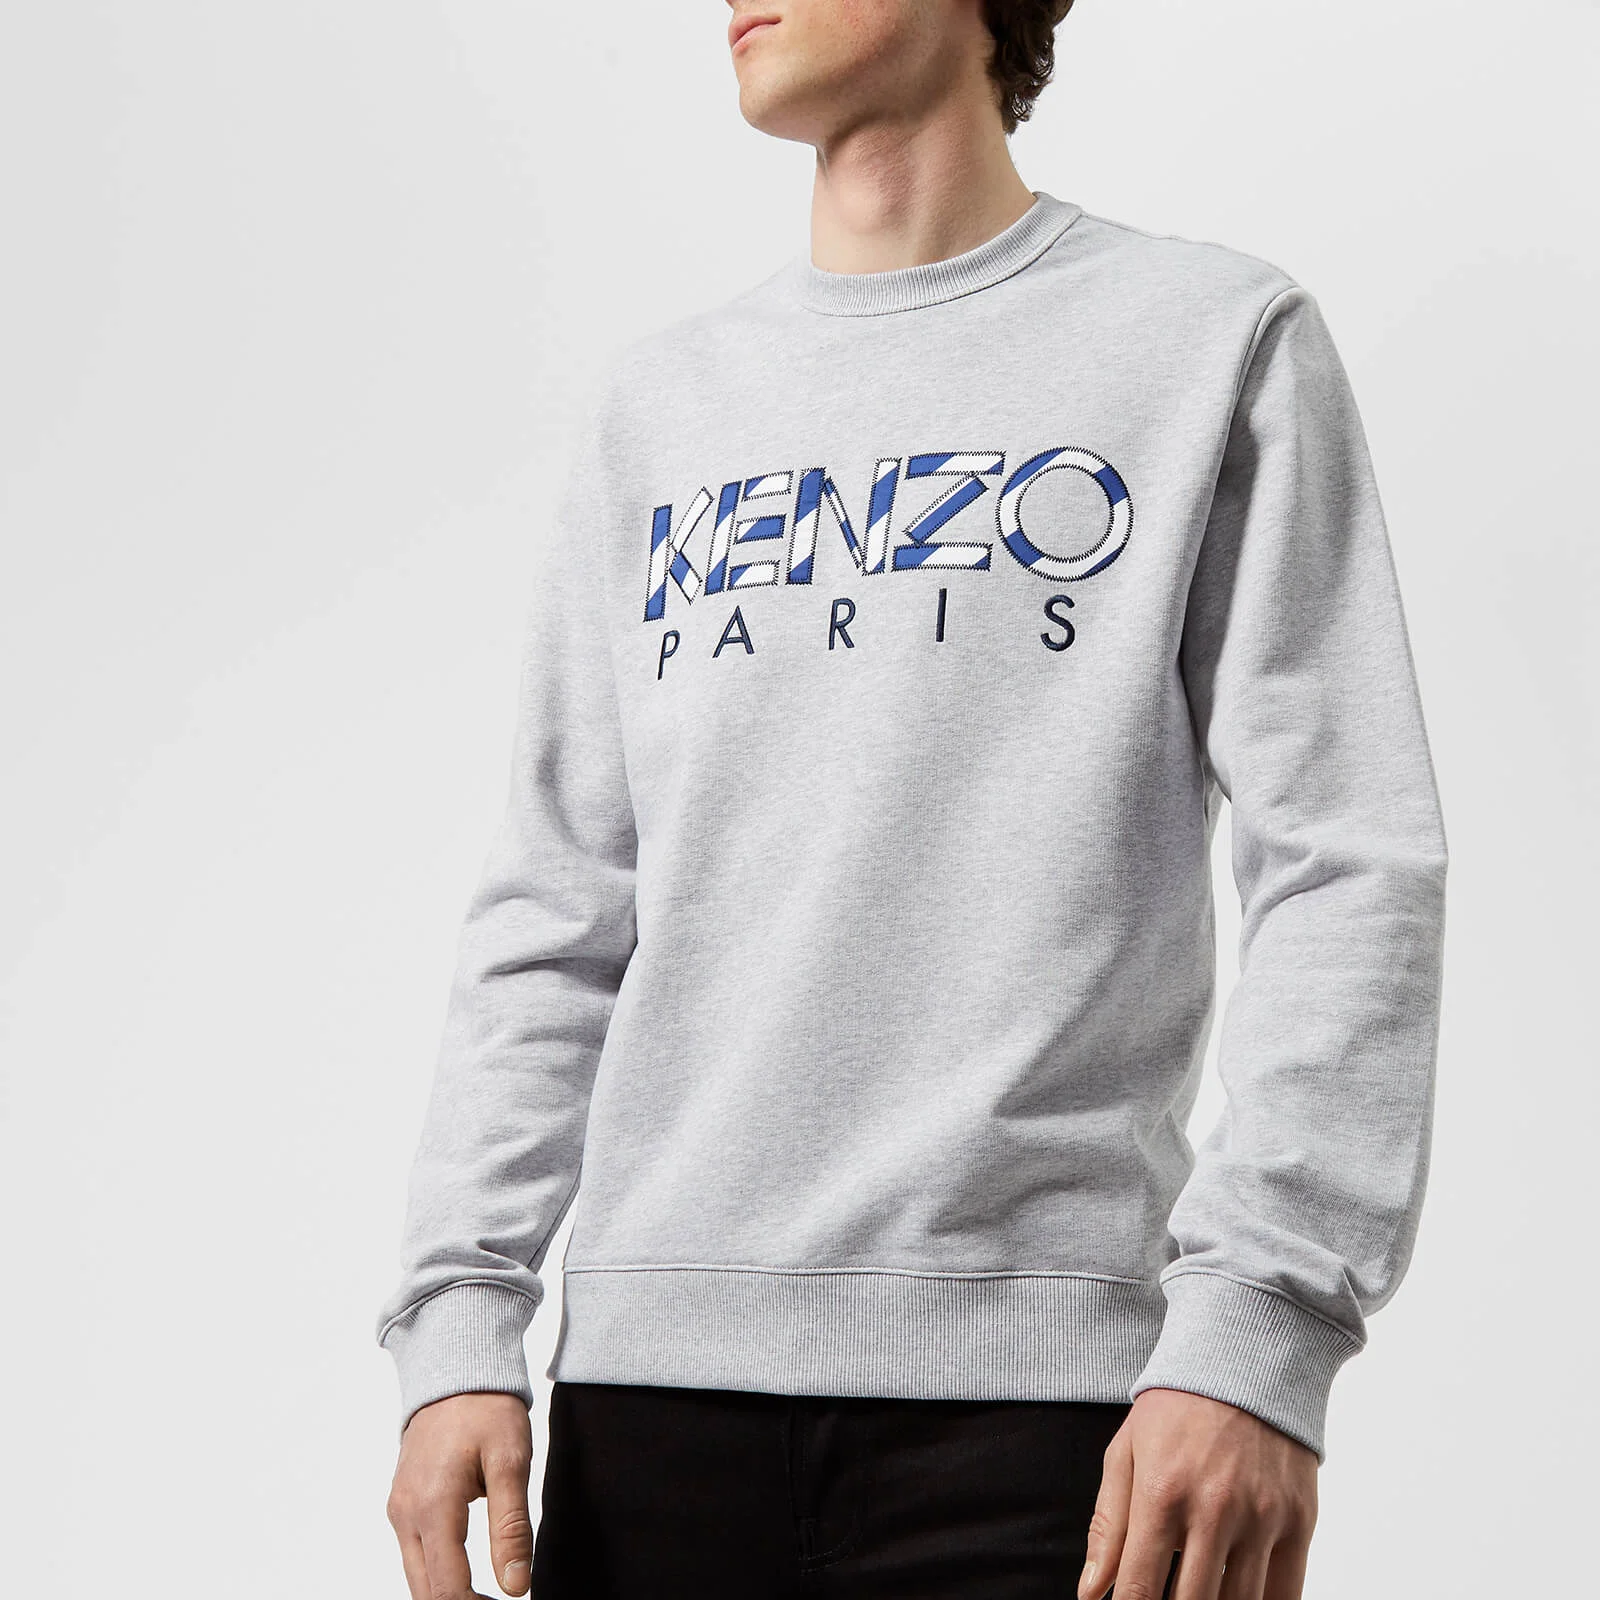 KENZO Men's KENZO Paris Embroidered Sweatshirt - Pale Grey Image 1